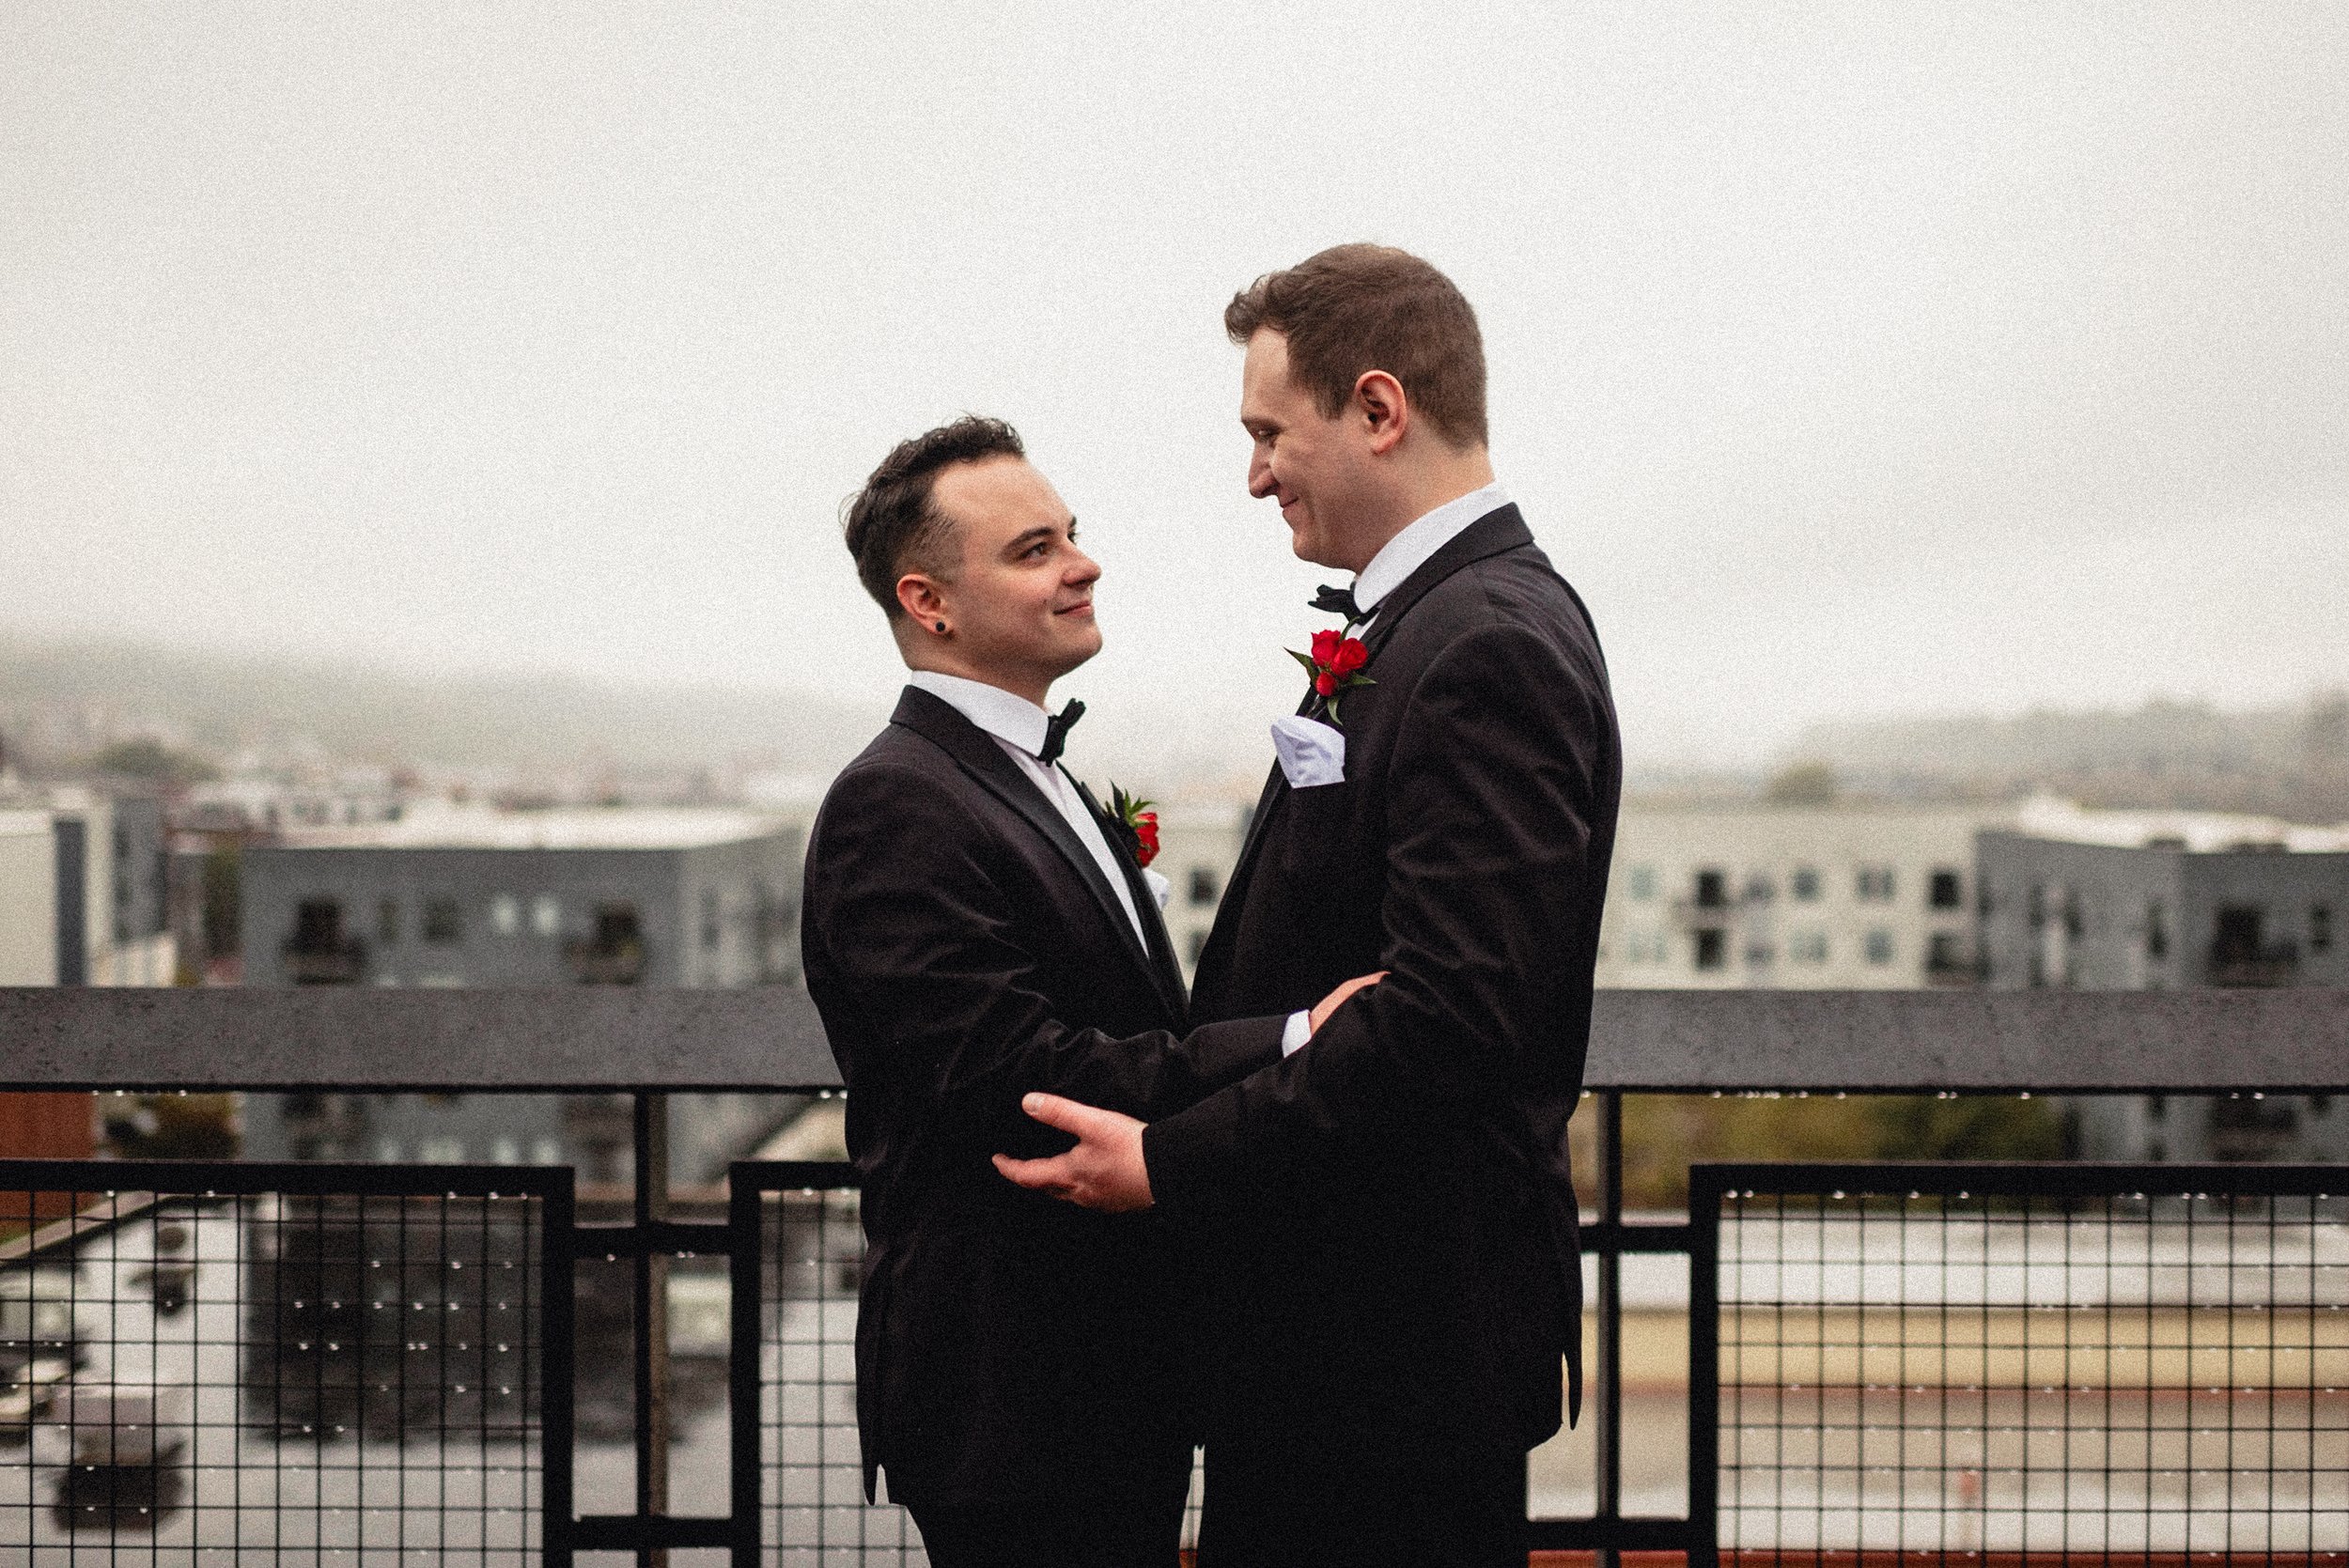 Requiem Images - LGBTQ Pittsburgh PA WV Elopement Wedding Photographer - Randy Zach Tryp Hotel Rooftop Micro Wedding -49.jpg